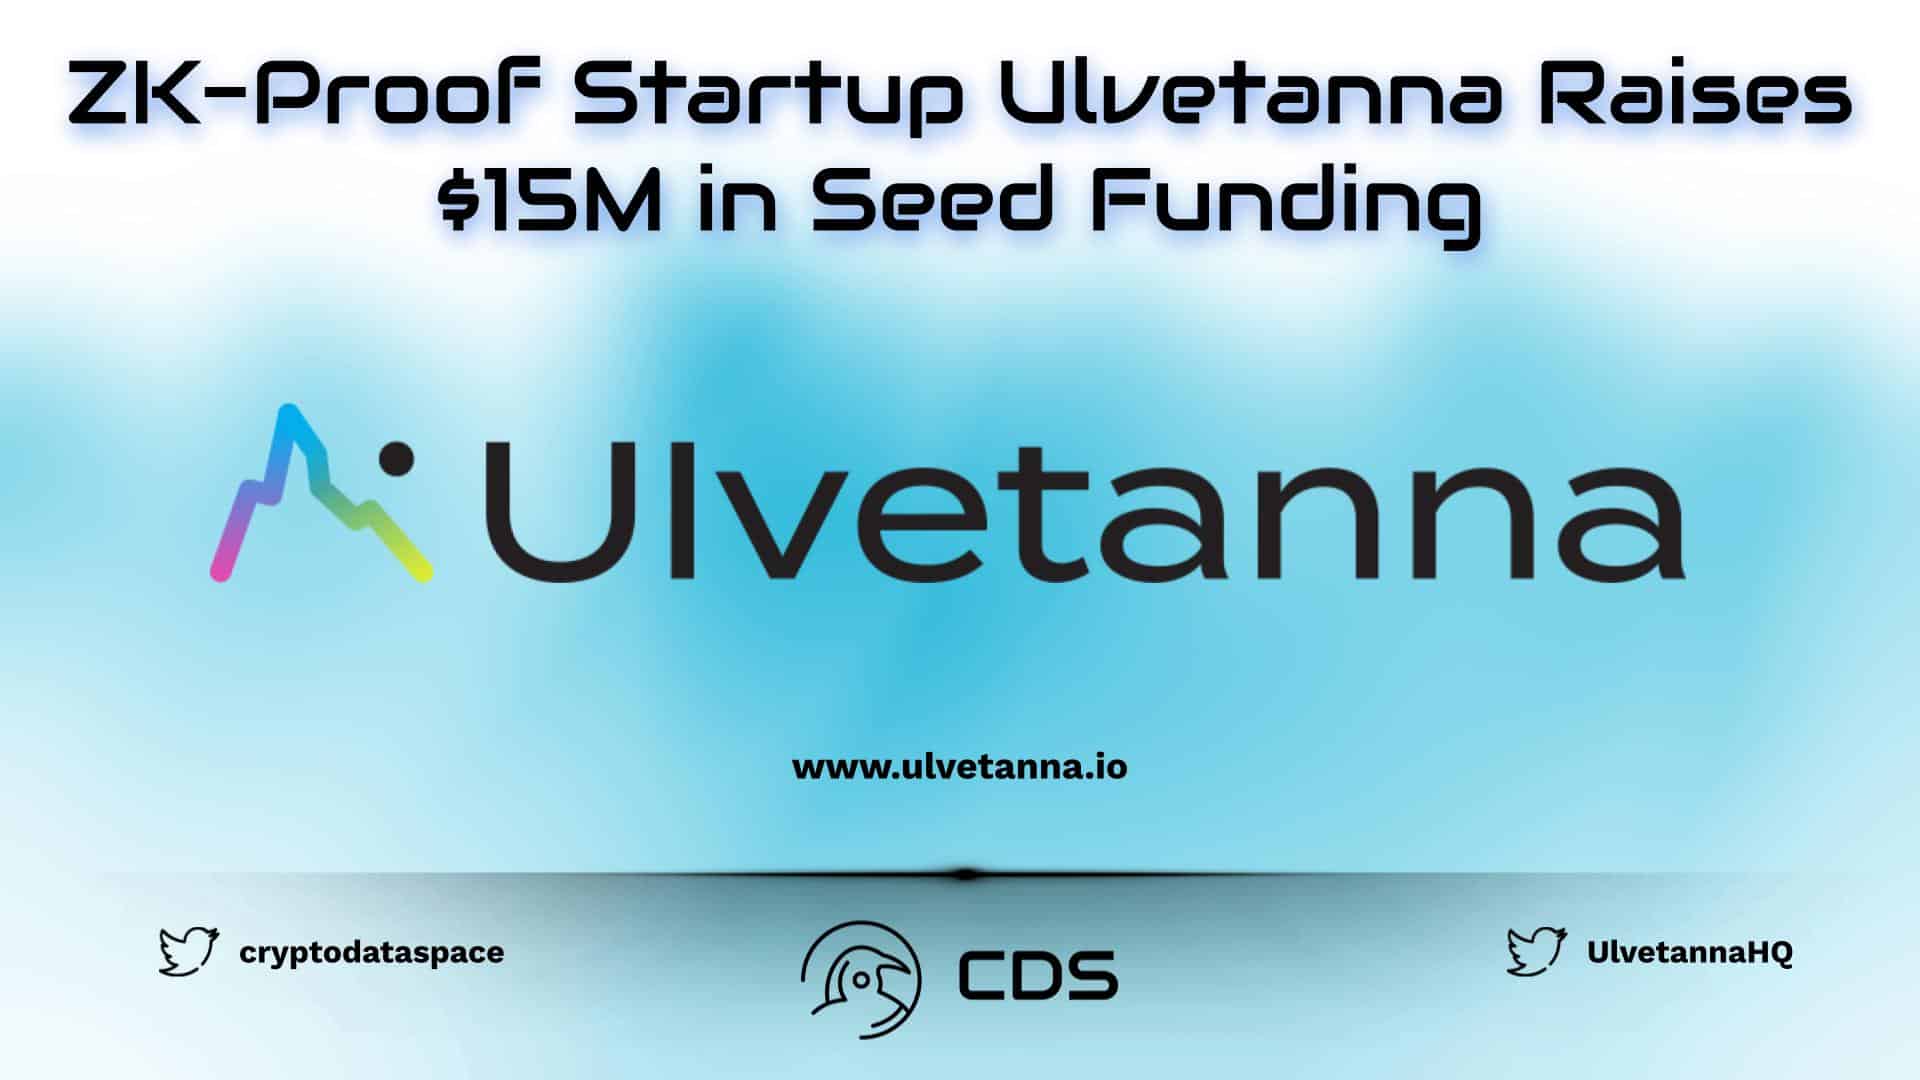 ZK-Proof Startup Ulvetanna Raises $15M in Seed Funding